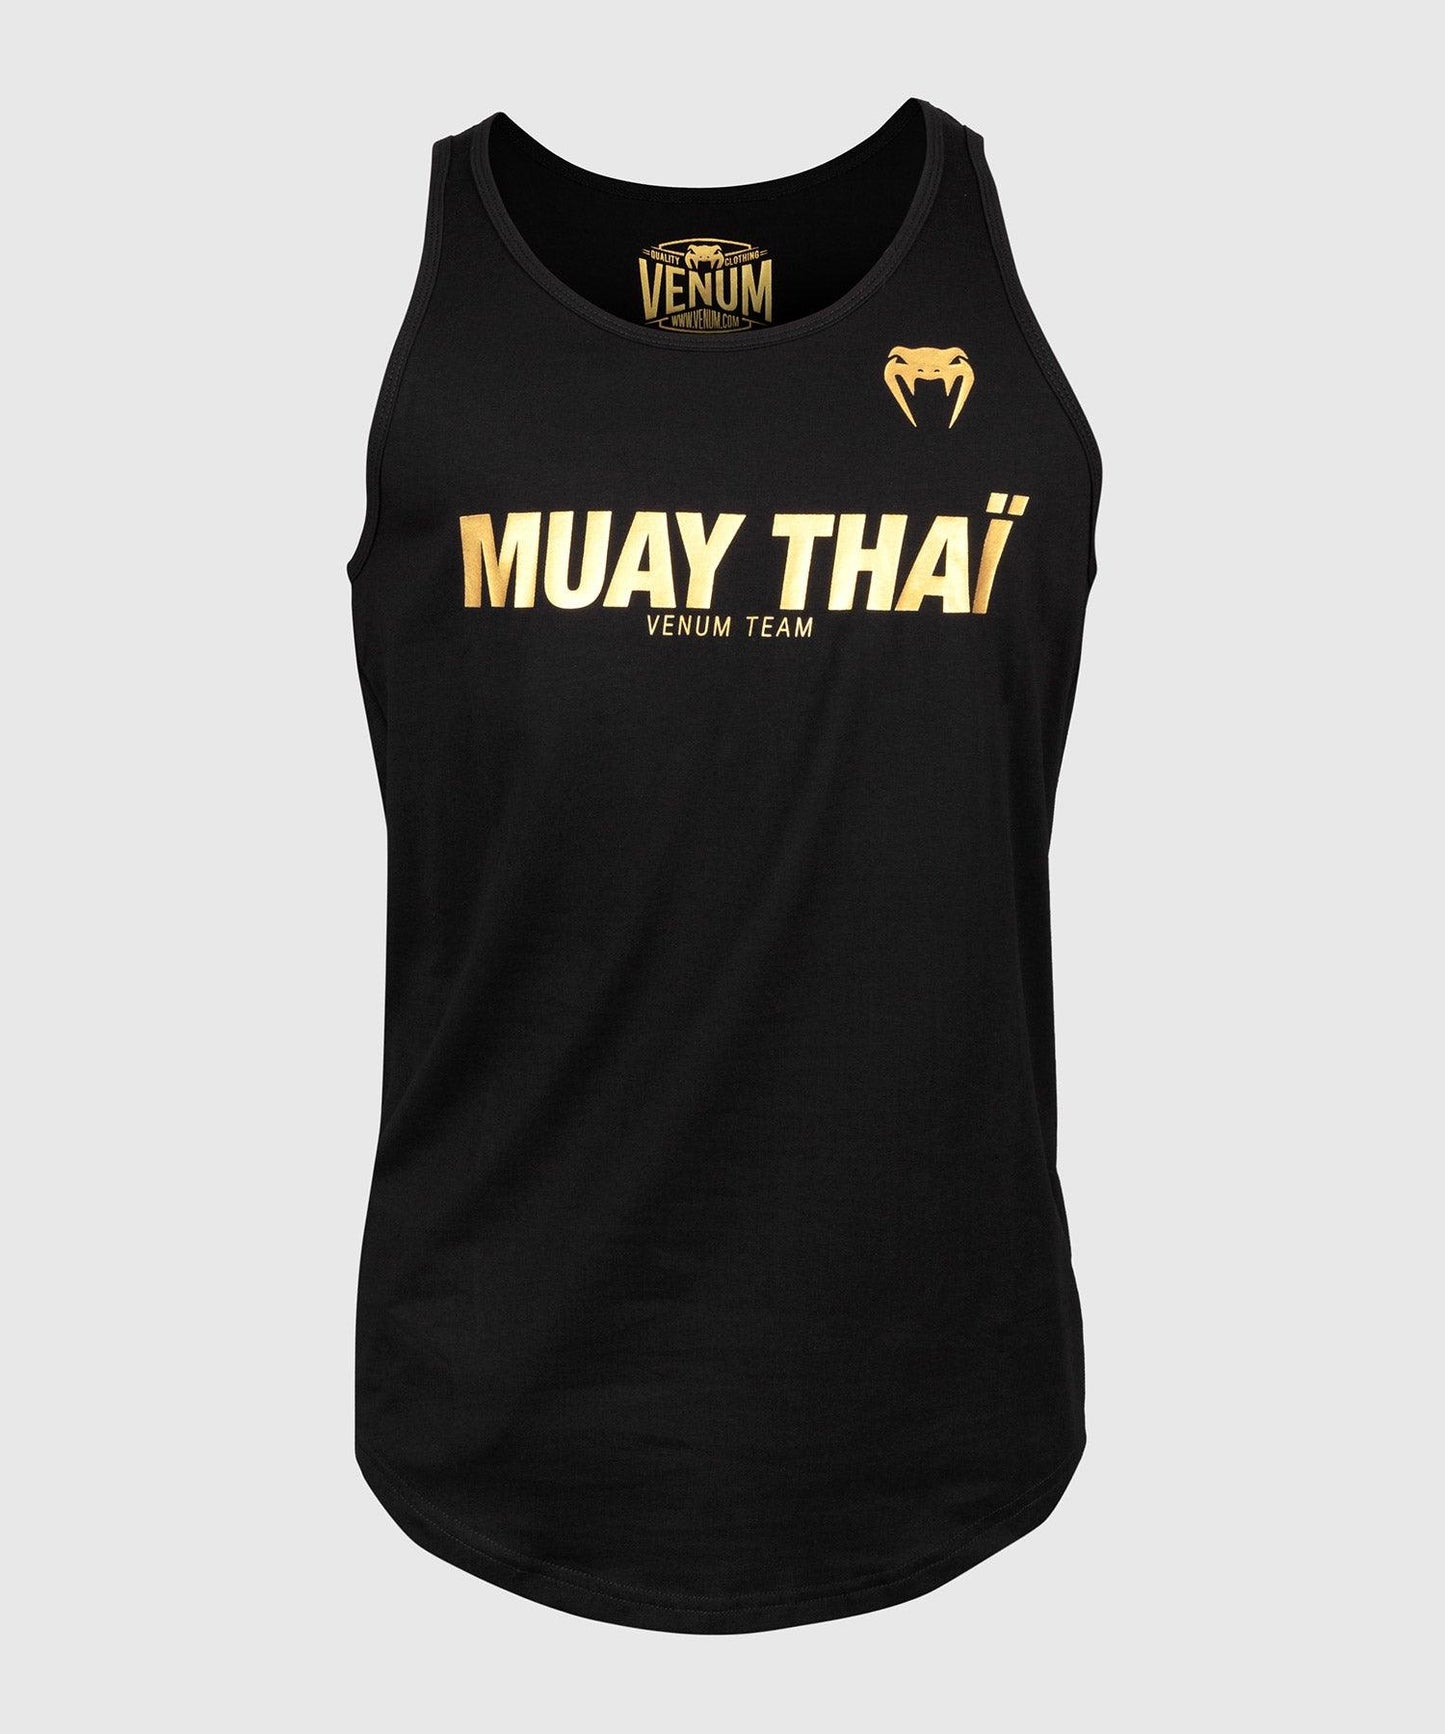 Venum Muay Thai VT Tank Top - Black/Gold Picture 2